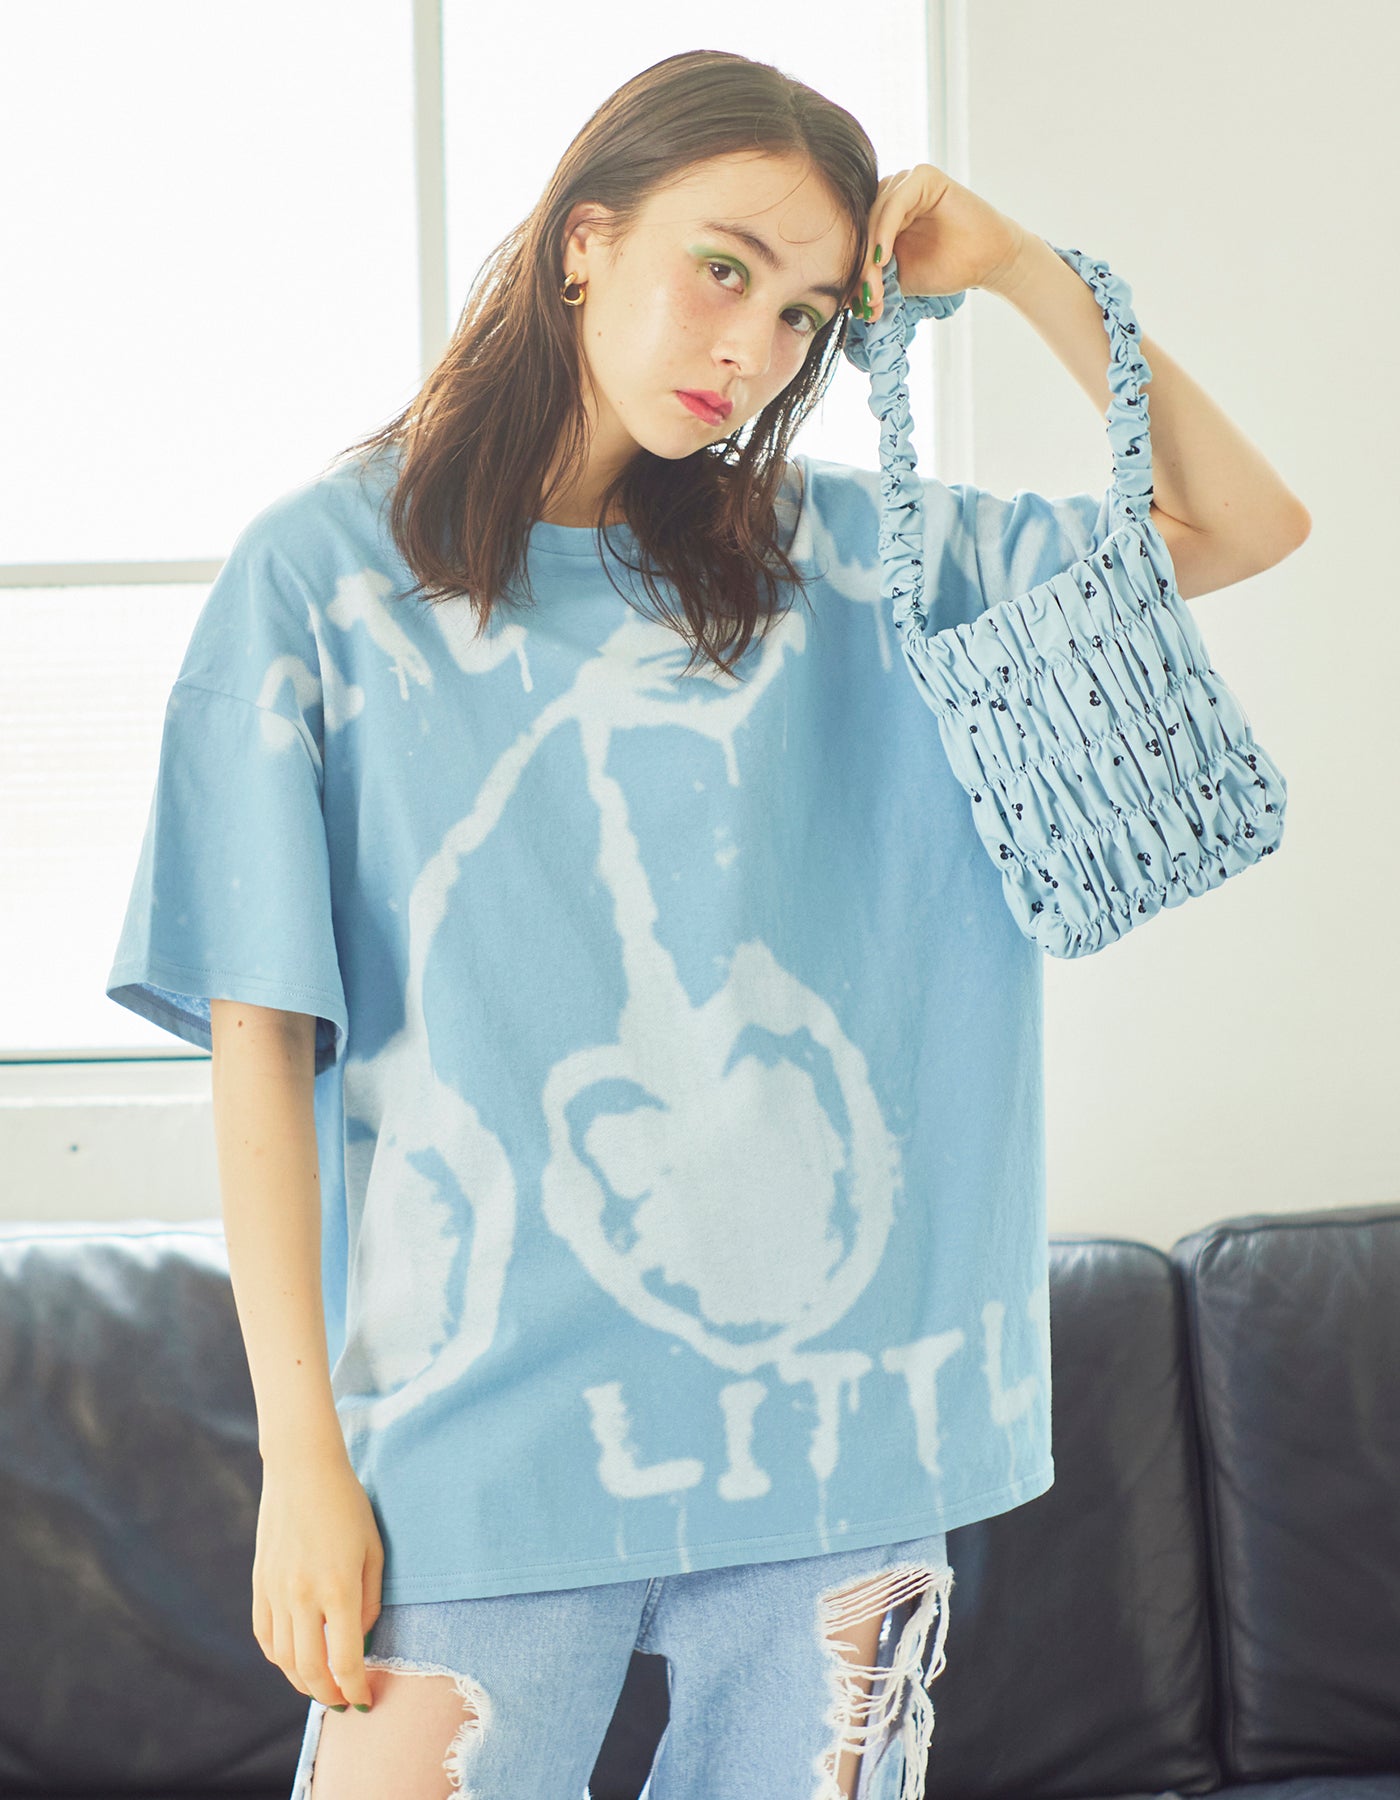 little sunny bite (リトルサニーバイト)cherry shoulder bag / BLUE ...